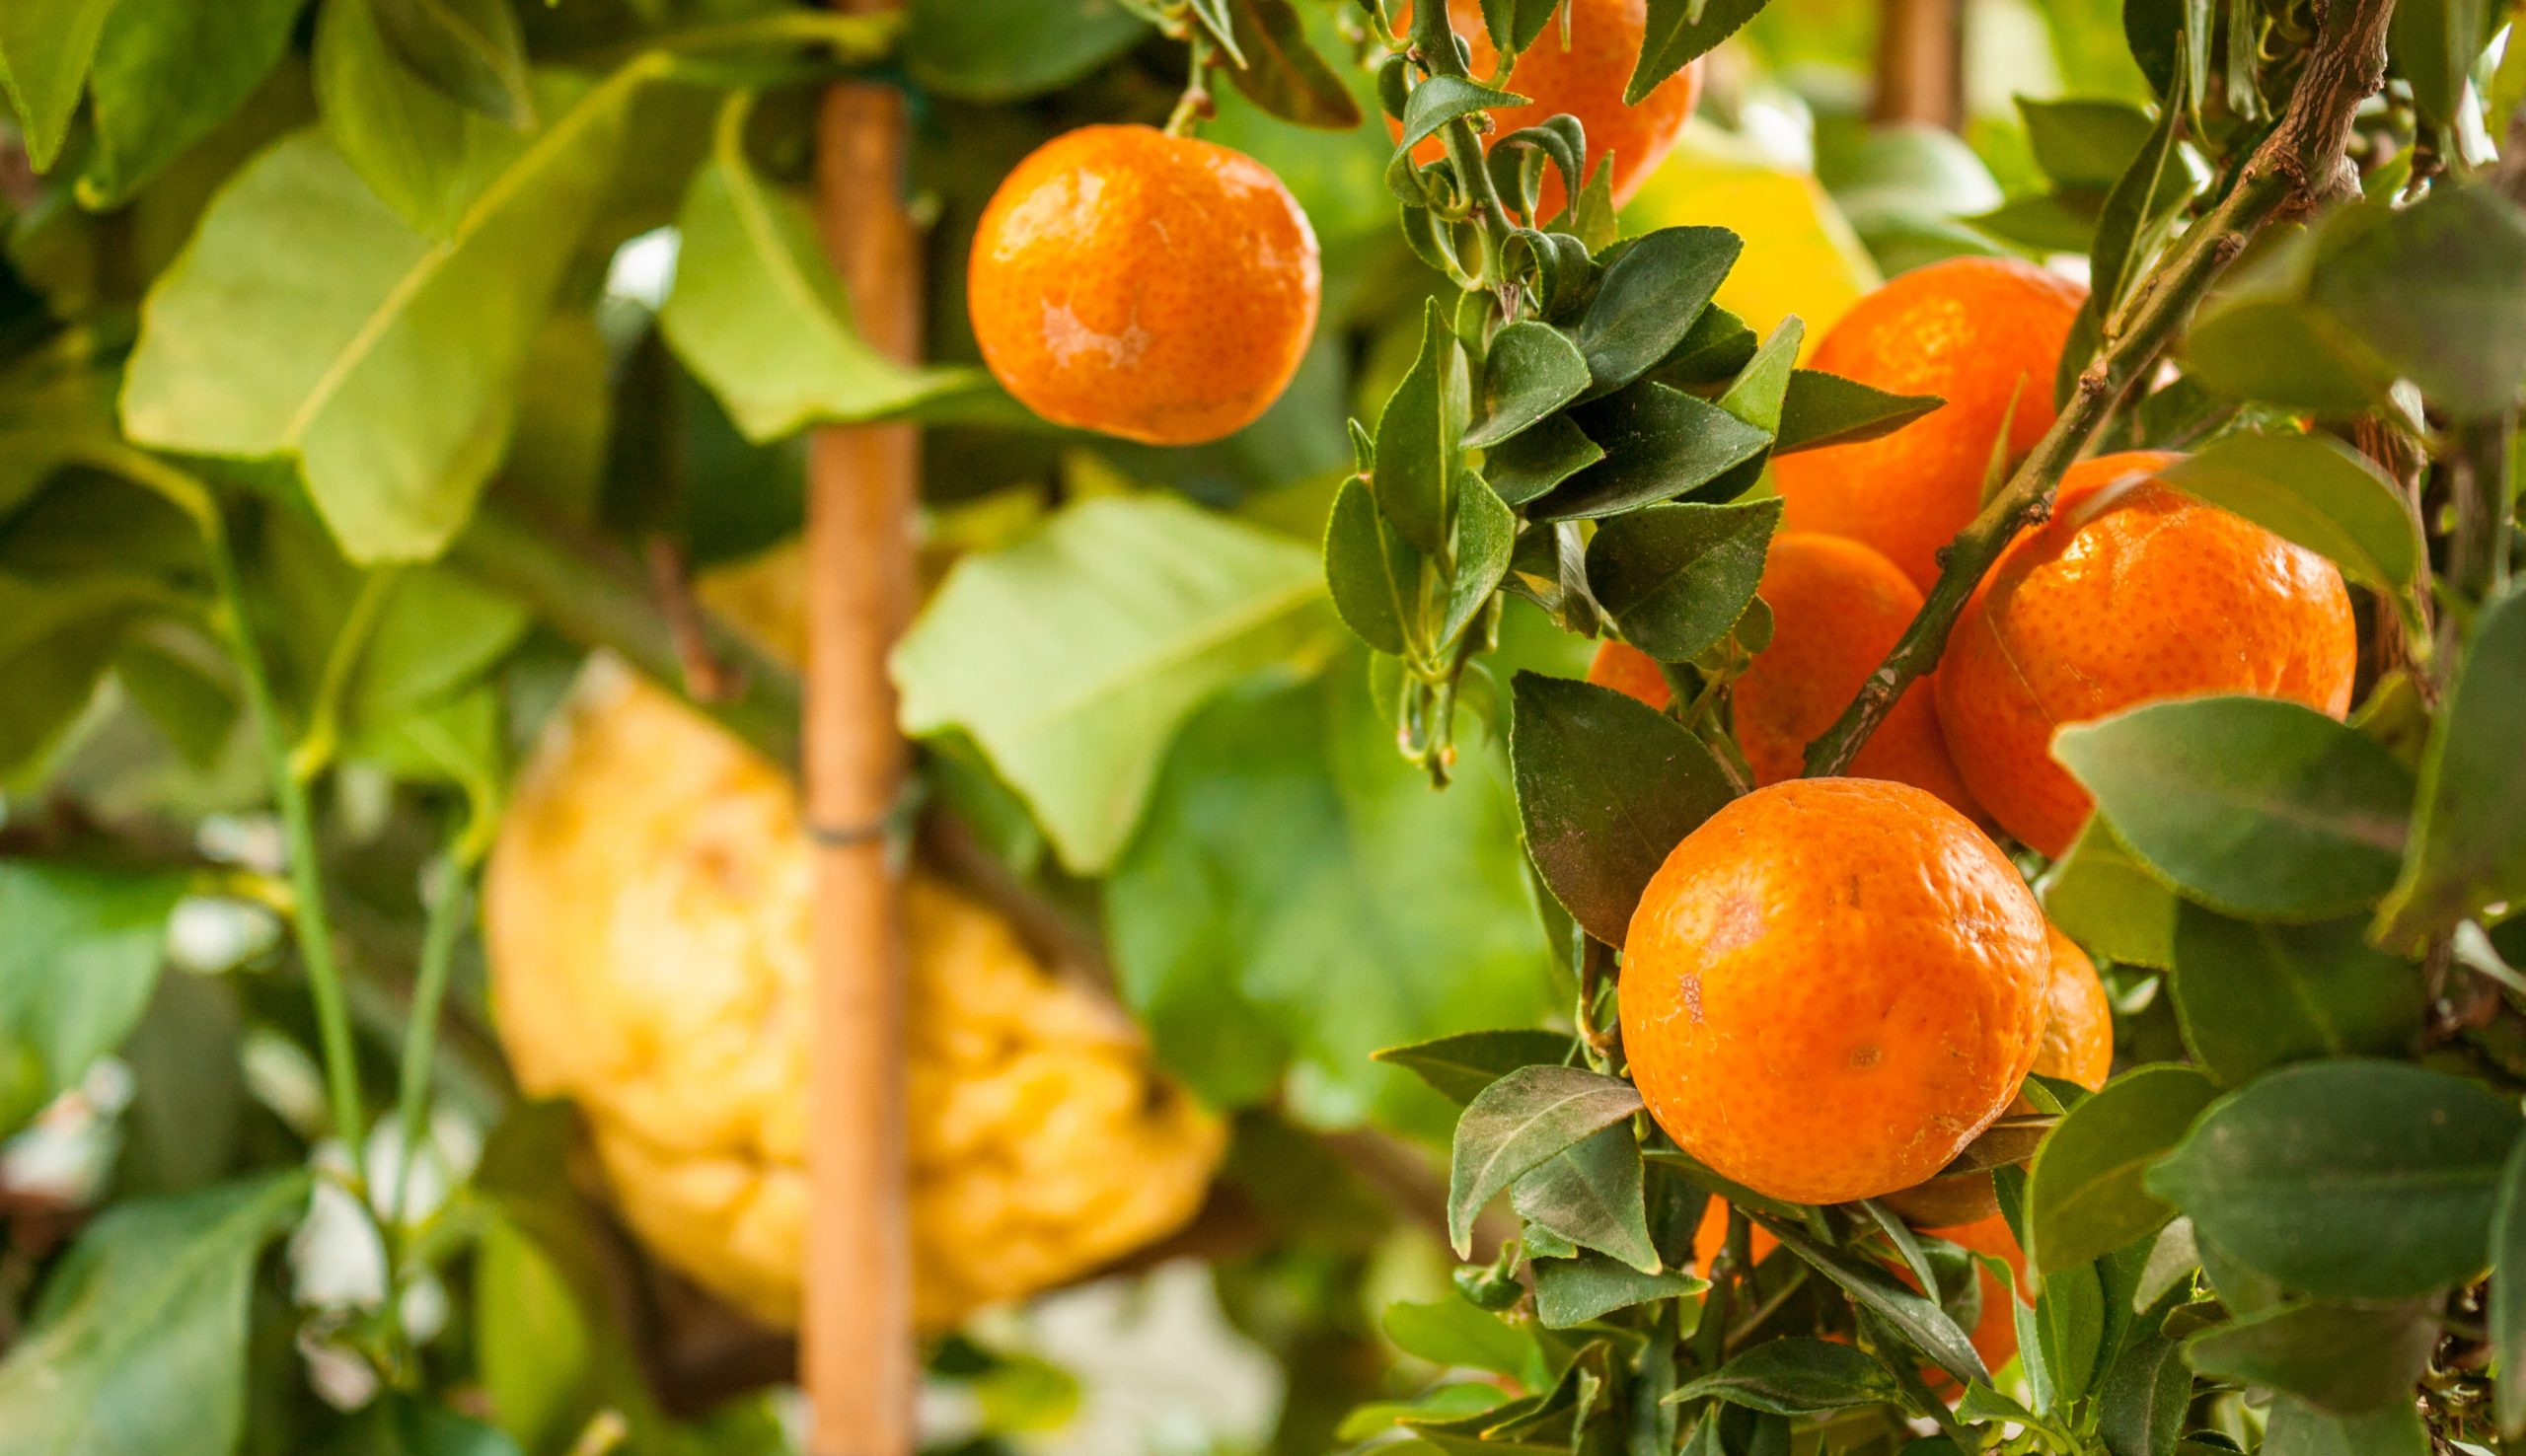 Can You Espalier An Orange Tree?